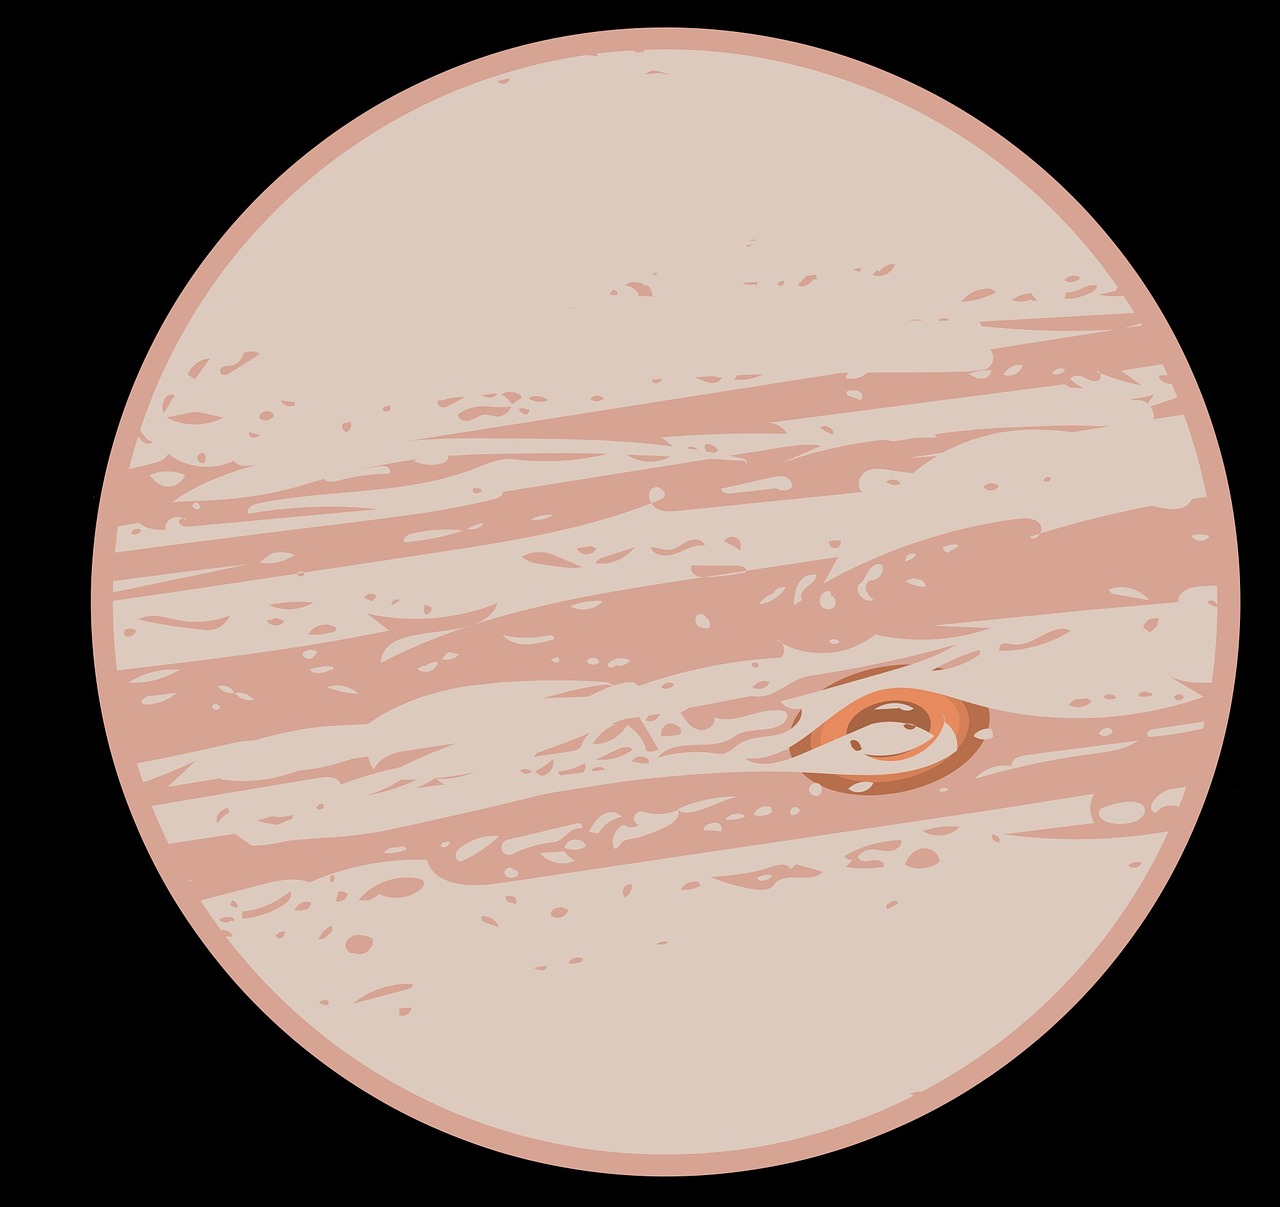 jupiter planet illustration free photo